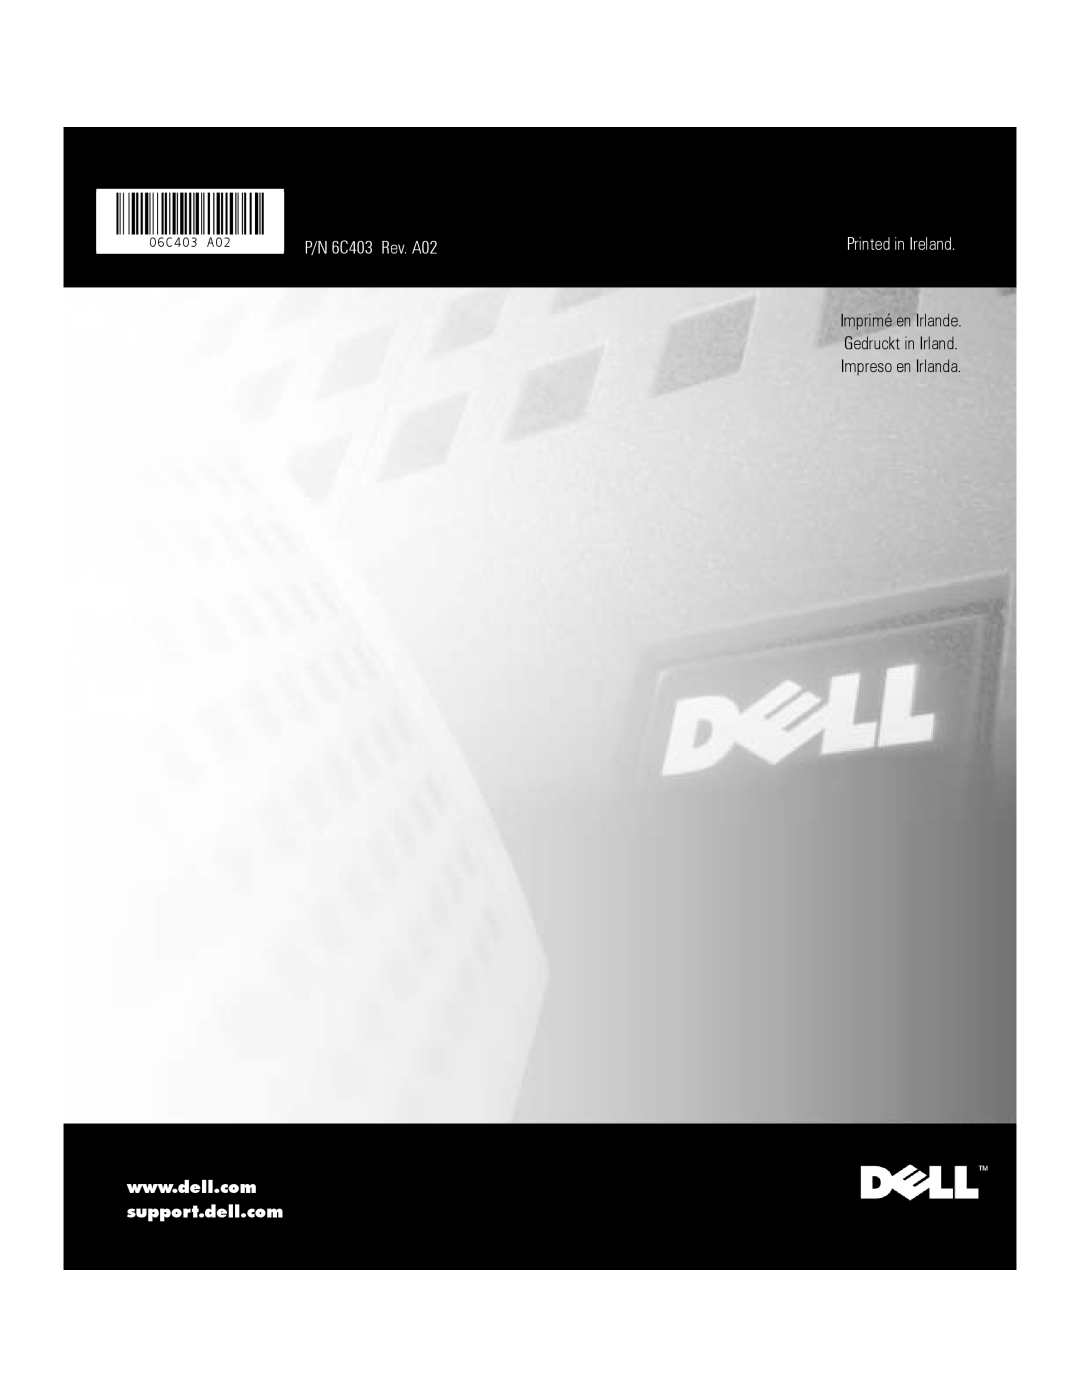 Dell FE100 Imprimé en Irlande Gedruckt in Irland, Impreso en Irlanda, P/N 6C403 Rev. A02, Printed in Ireland, 06C403 A02 